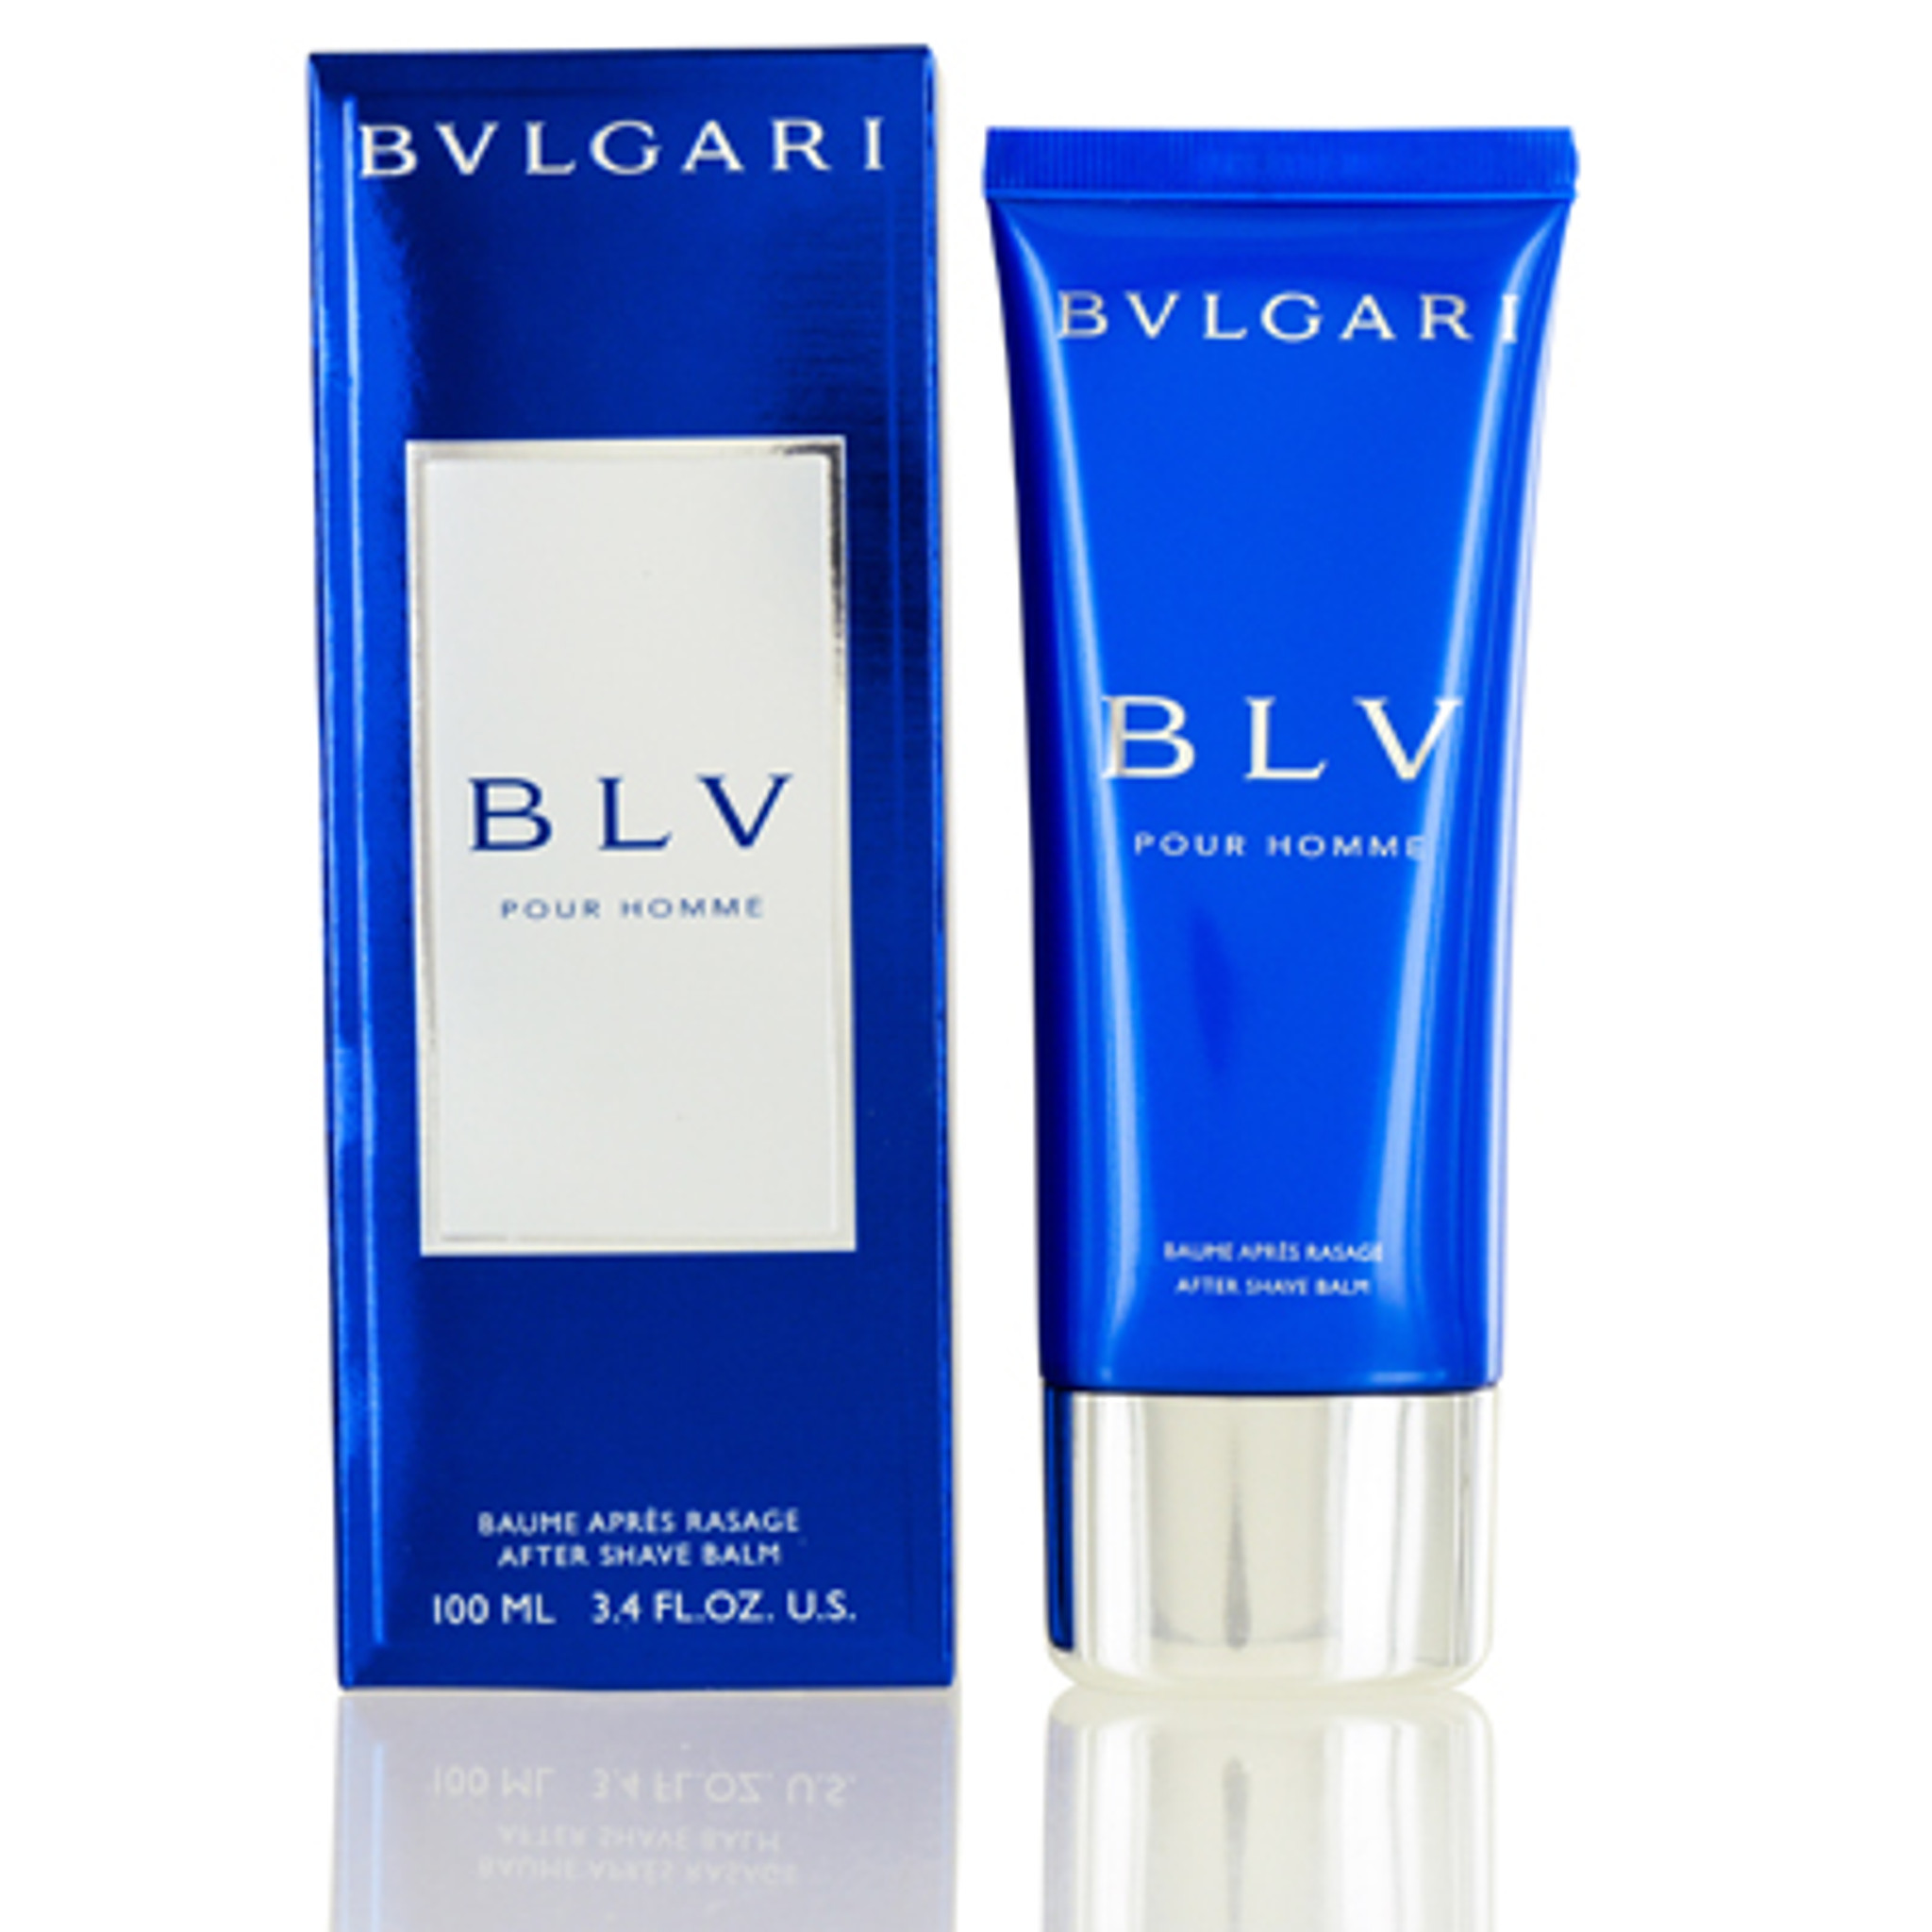 Bvlgari BLV Blu (For Men) Fragrance Review 